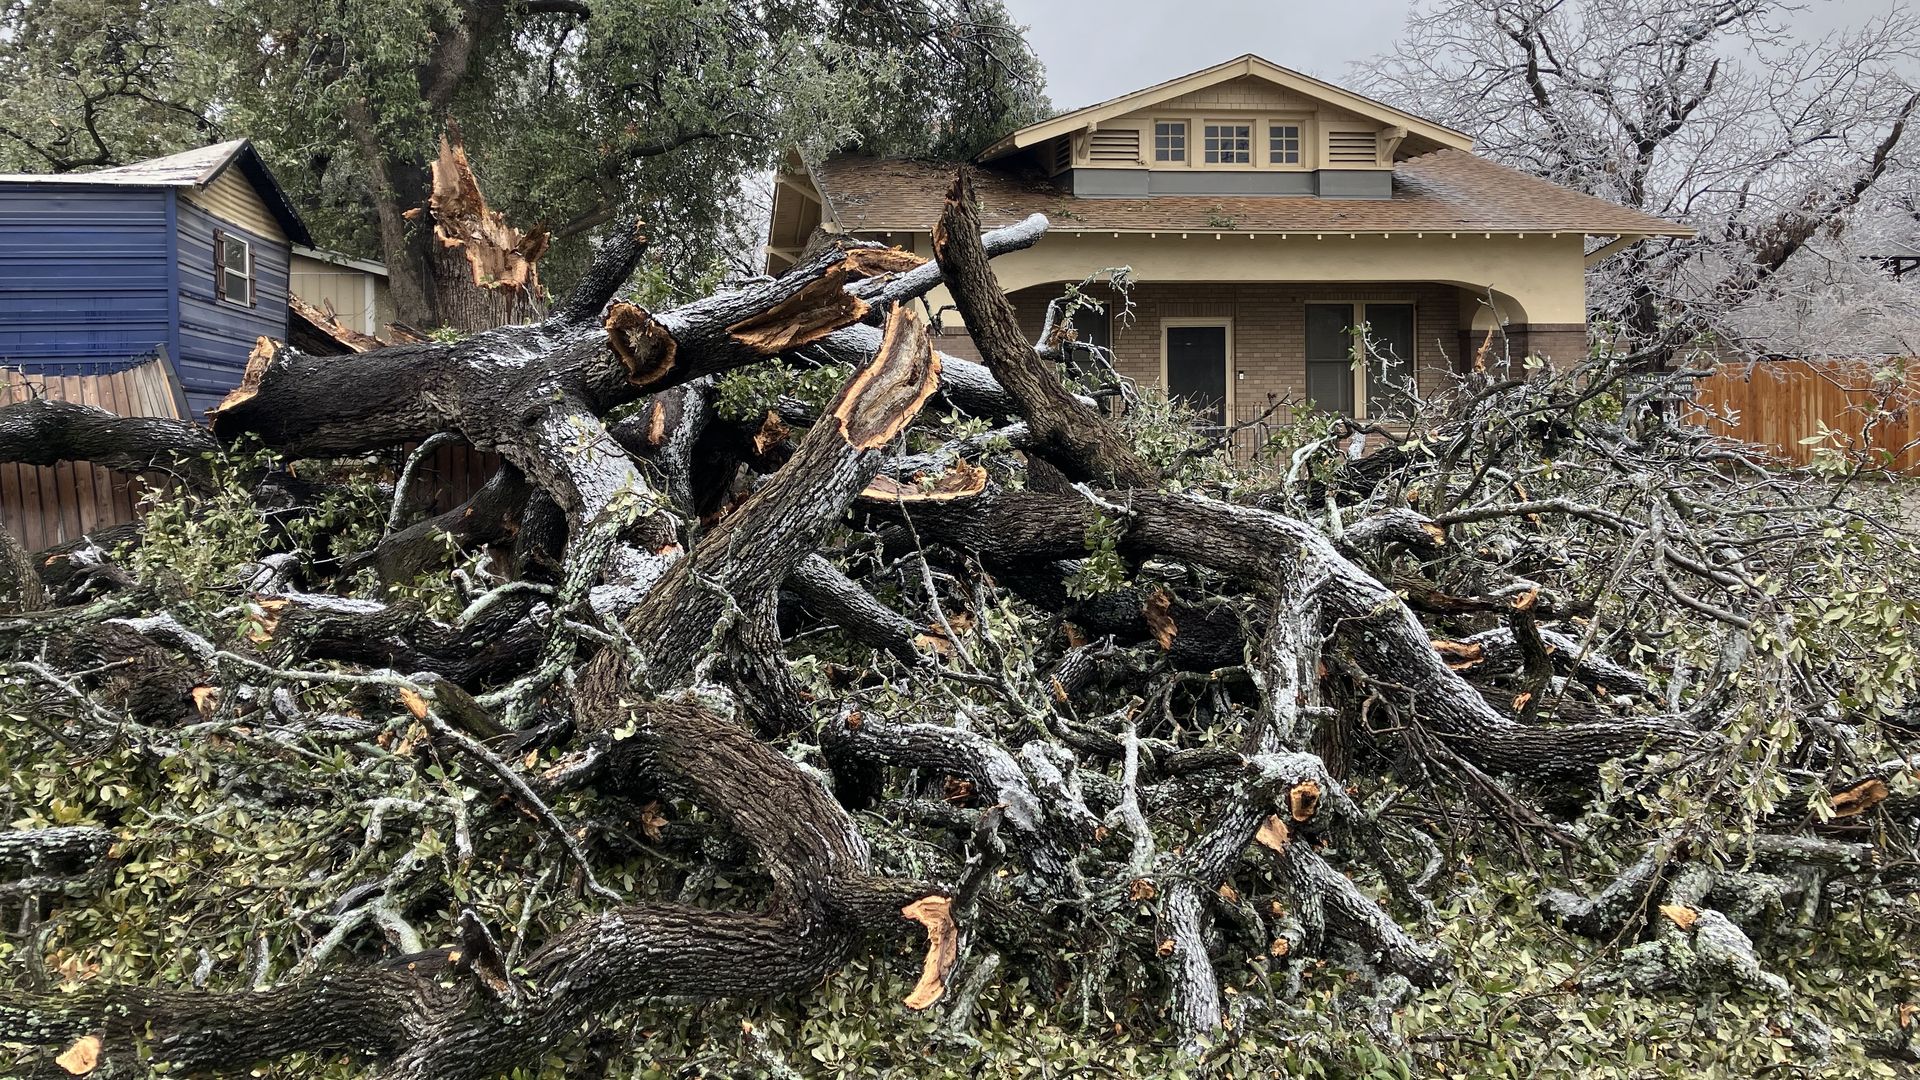 A rubble of live oak branches.